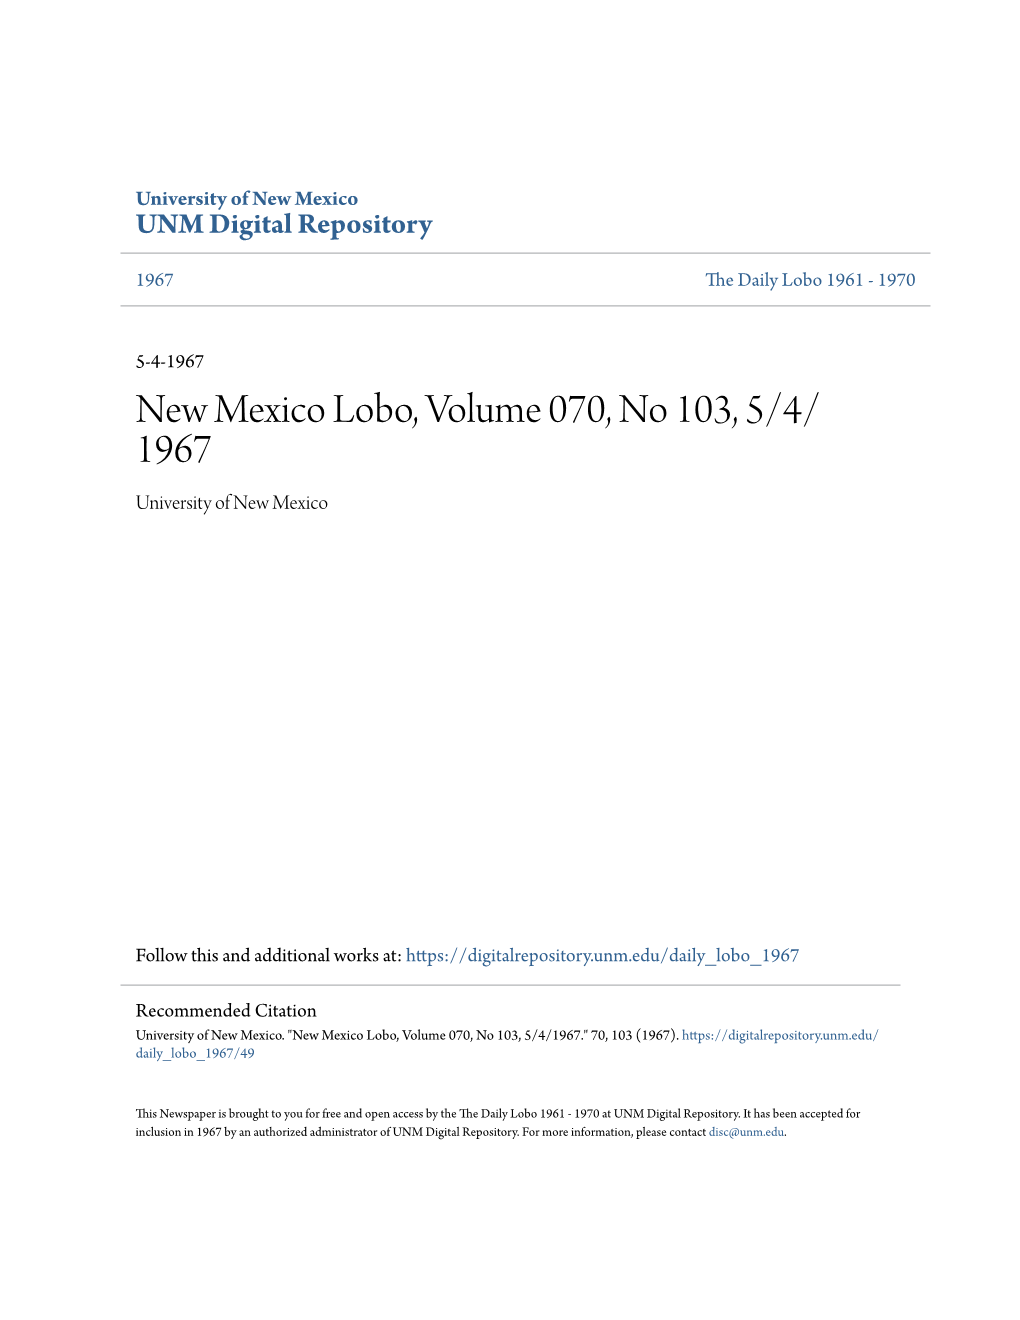 New Mexico Lobo, Volume 070, No 103, 5/4/1967." 70, 103 (1967)